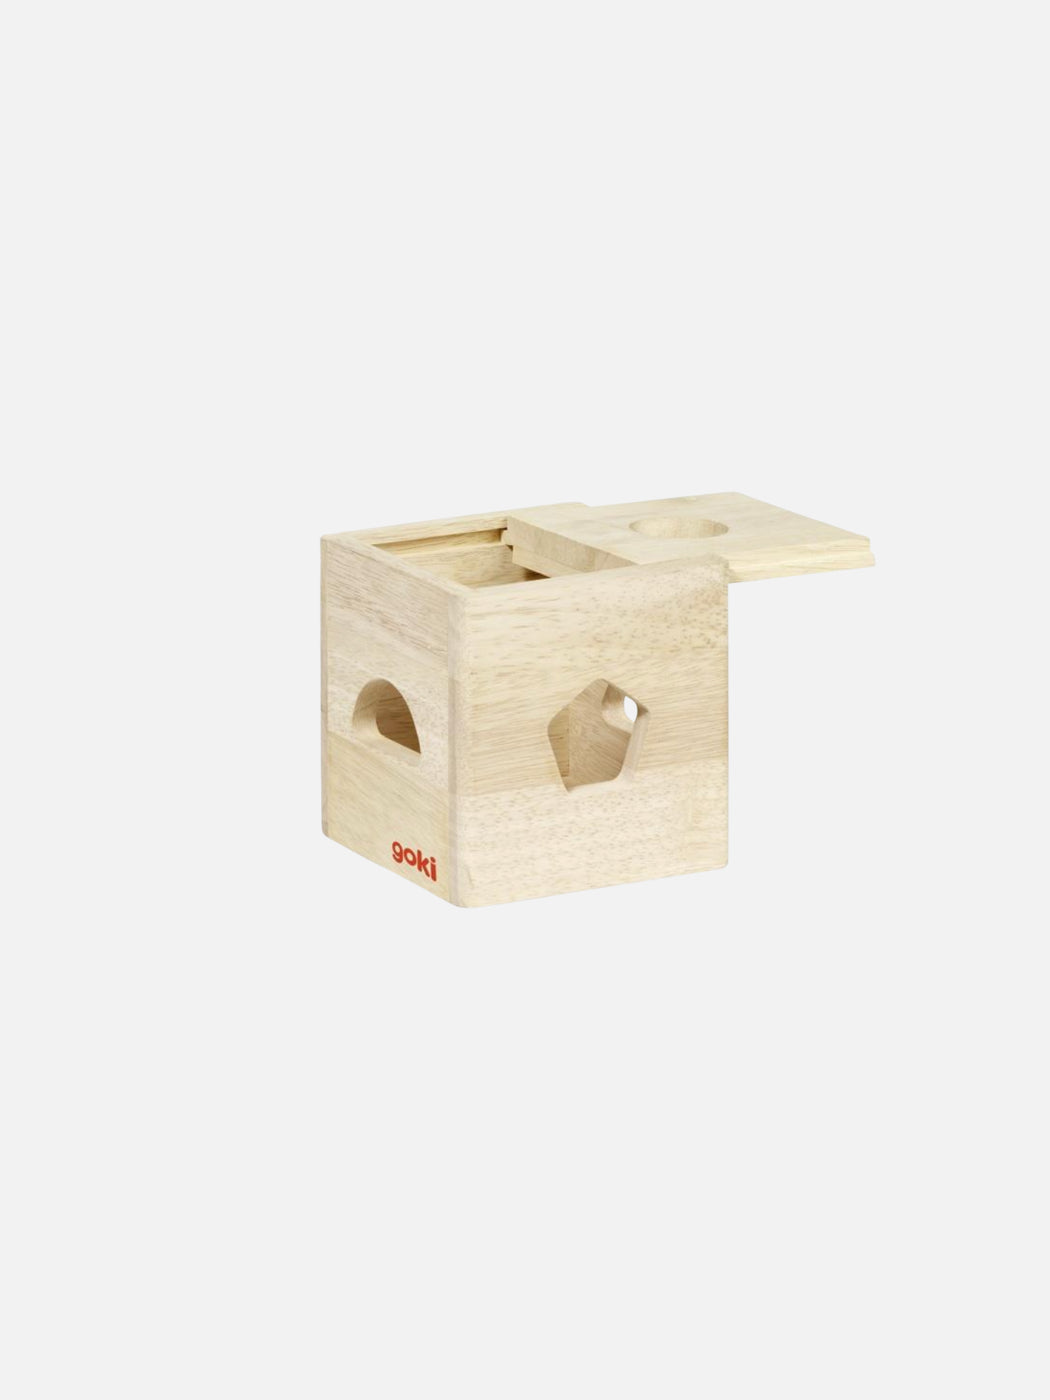 Wooden Sorting Box